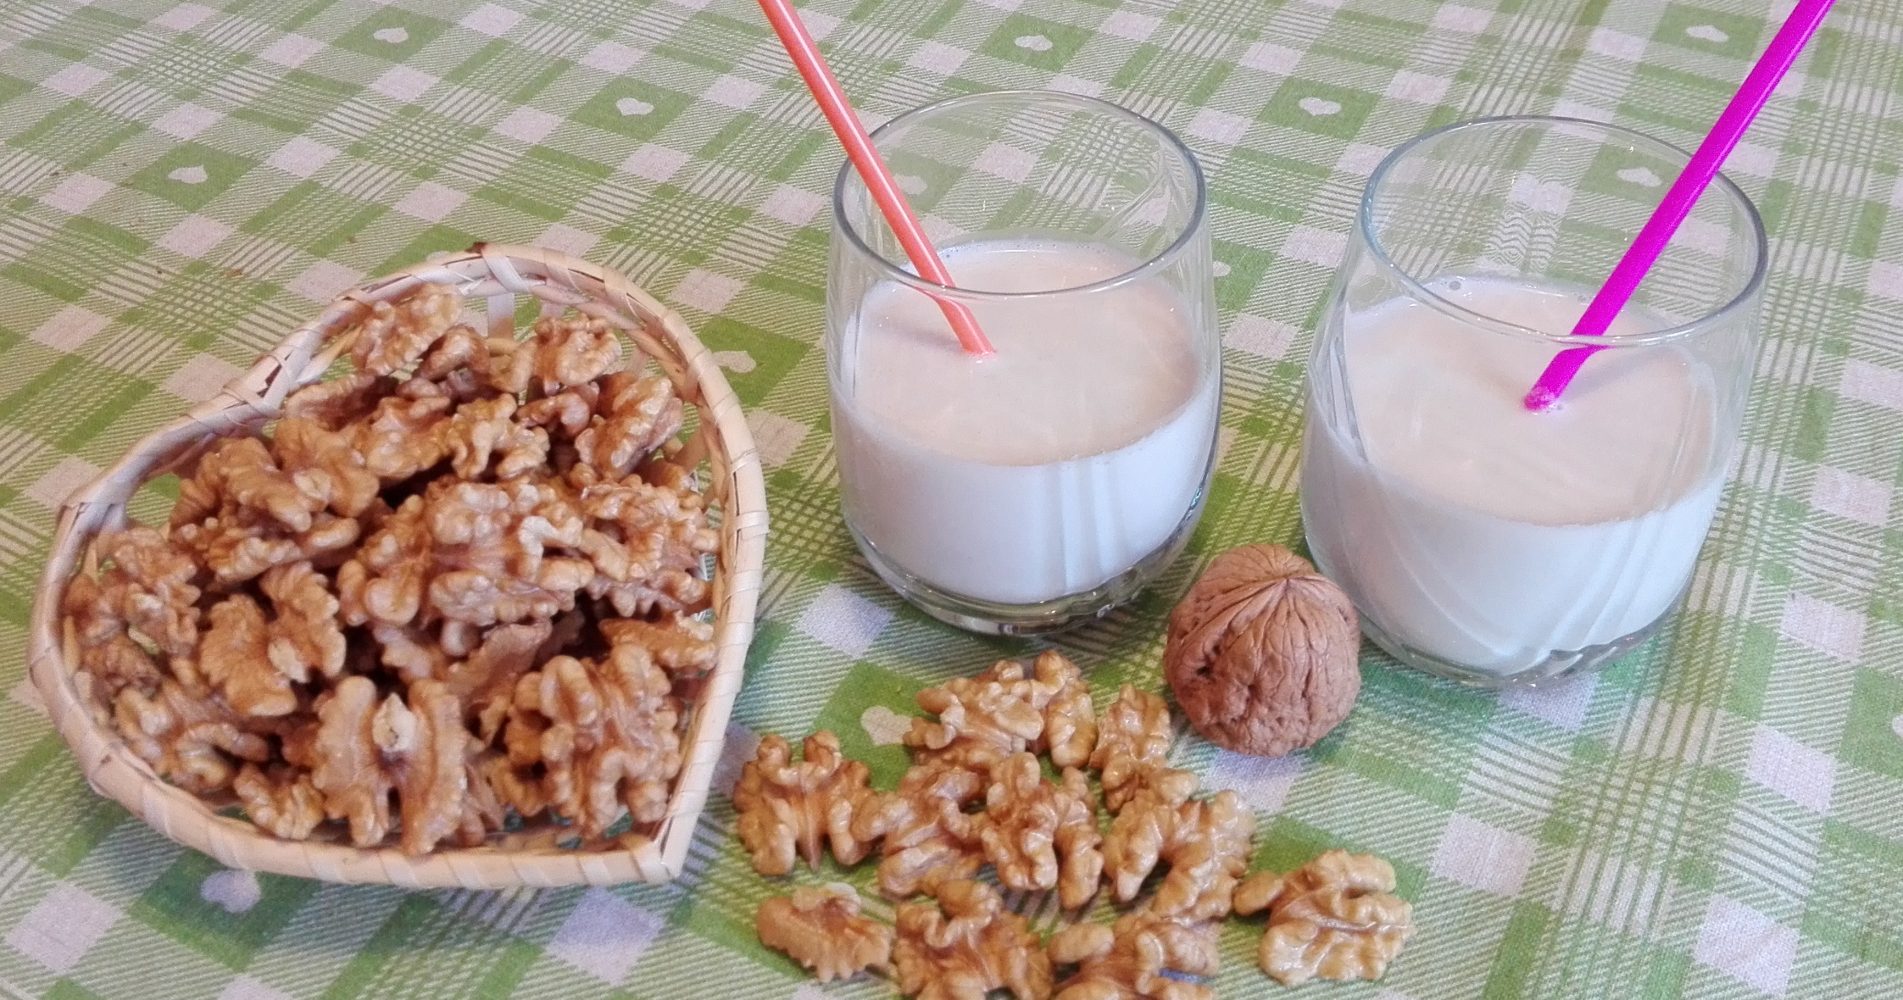 Latte di noci: ingredienti, ricetta e preparazione - Walnut milk: ingredients, recipe and preparation